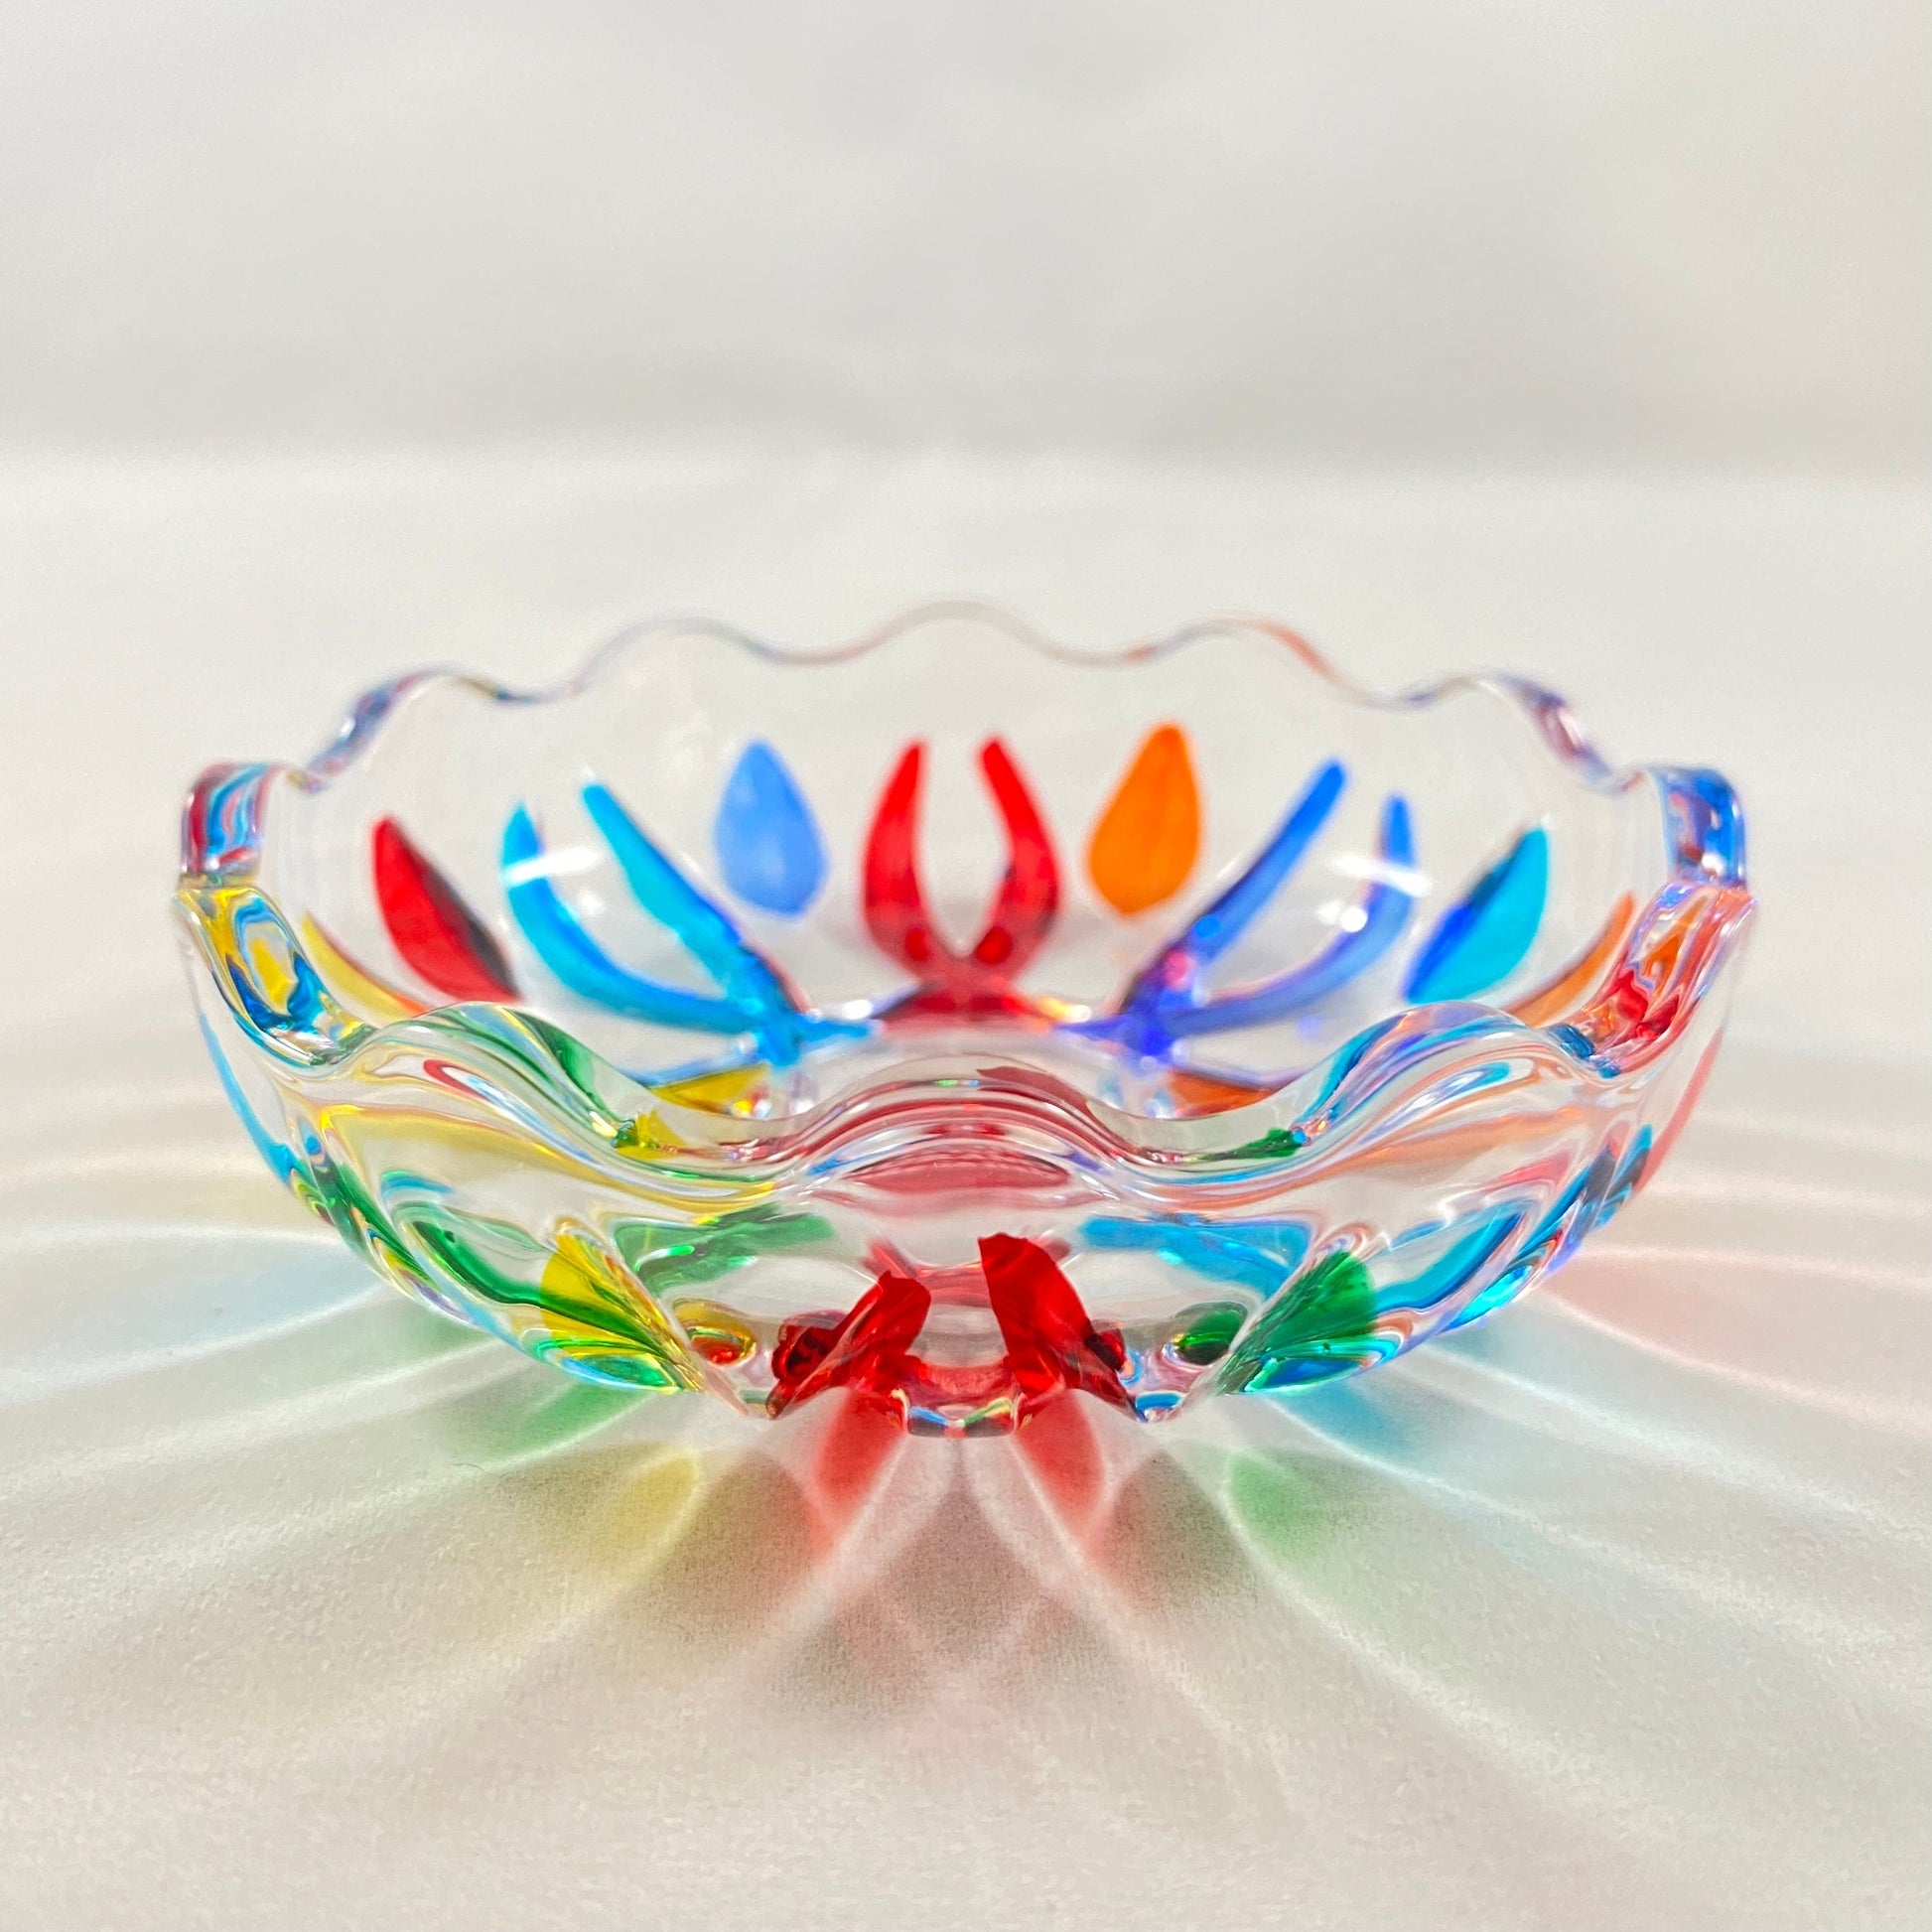 Venetian Glass Votive Holder/Dish - Handmade in Italy, Colorful Murano Glass